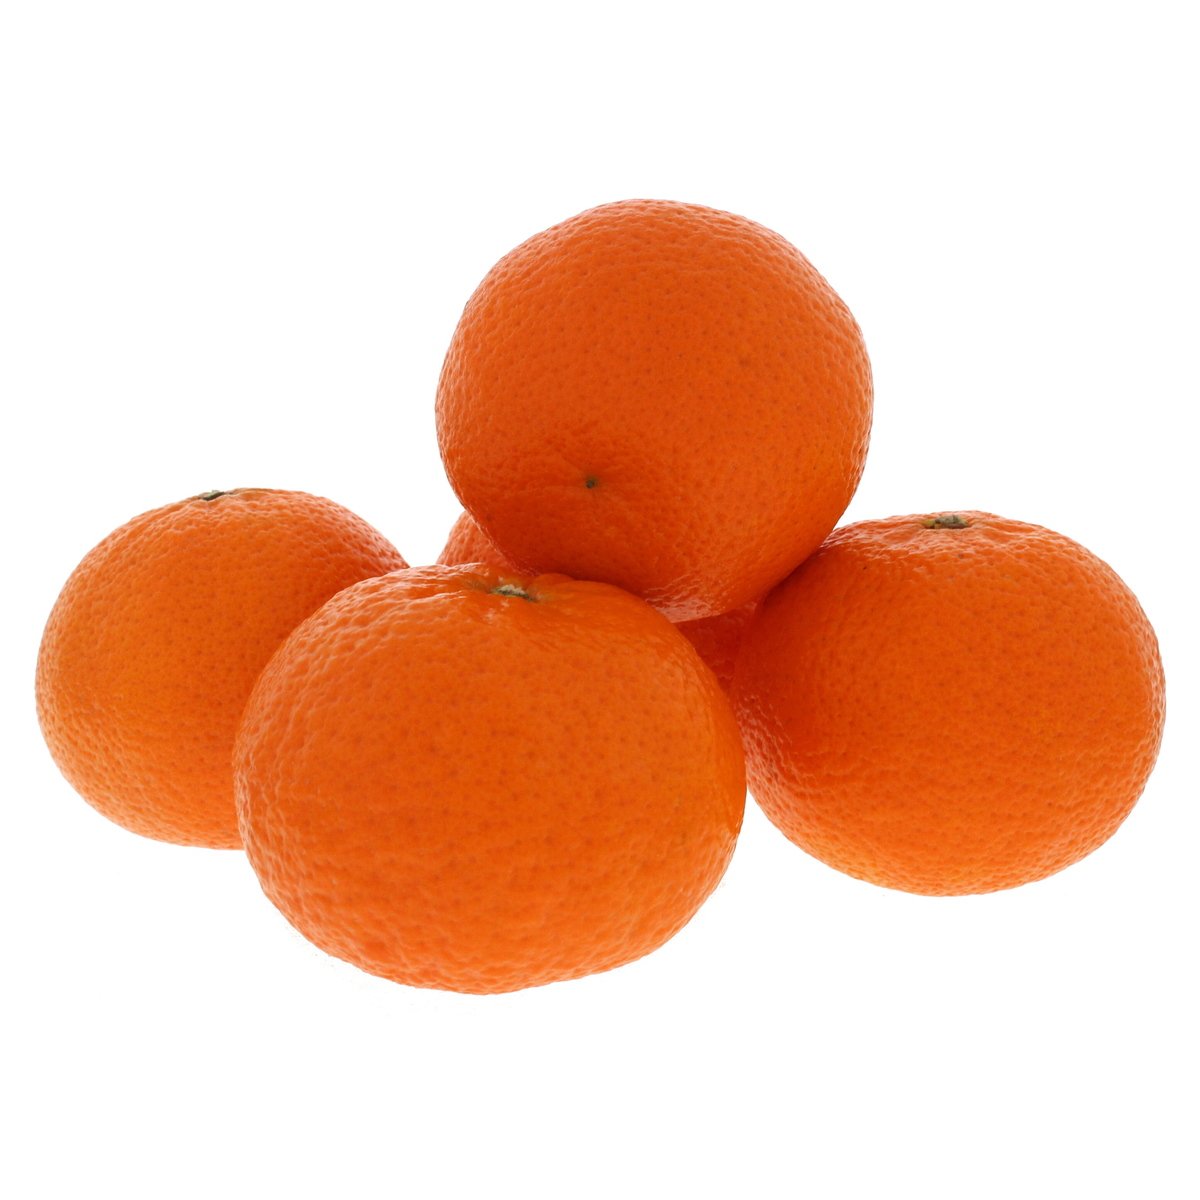 Buy Mandarin Nova South Africa 1 kg Online at Best Price | Citrus Fruits | Lulu Egypt in UAE